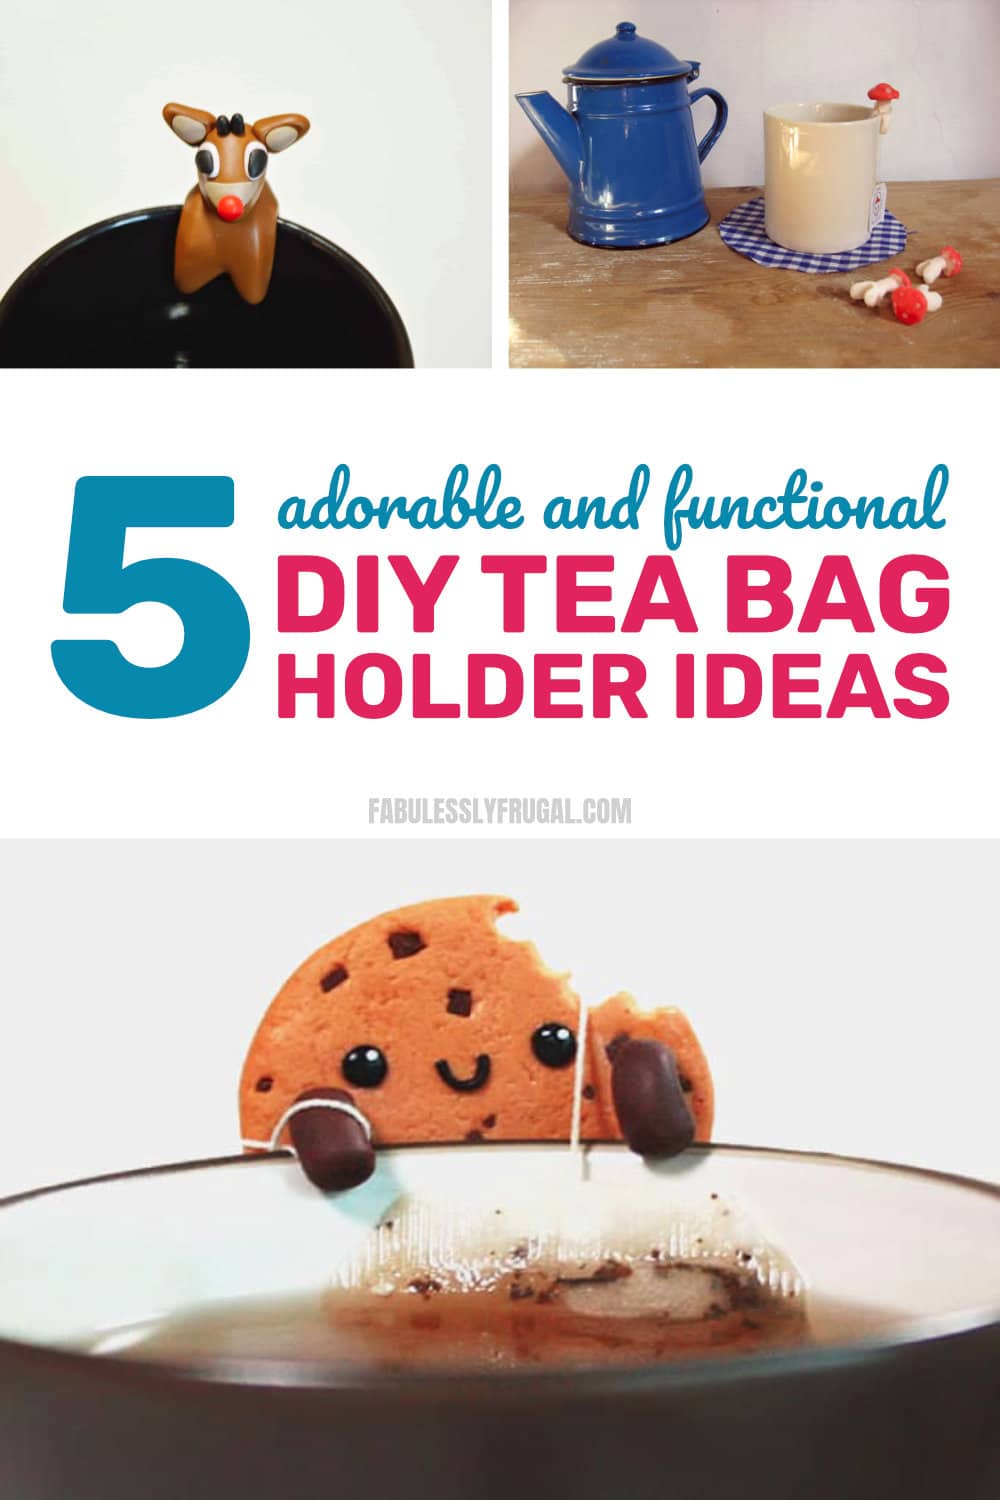 Adorable and functional diy tea bag holder ideas